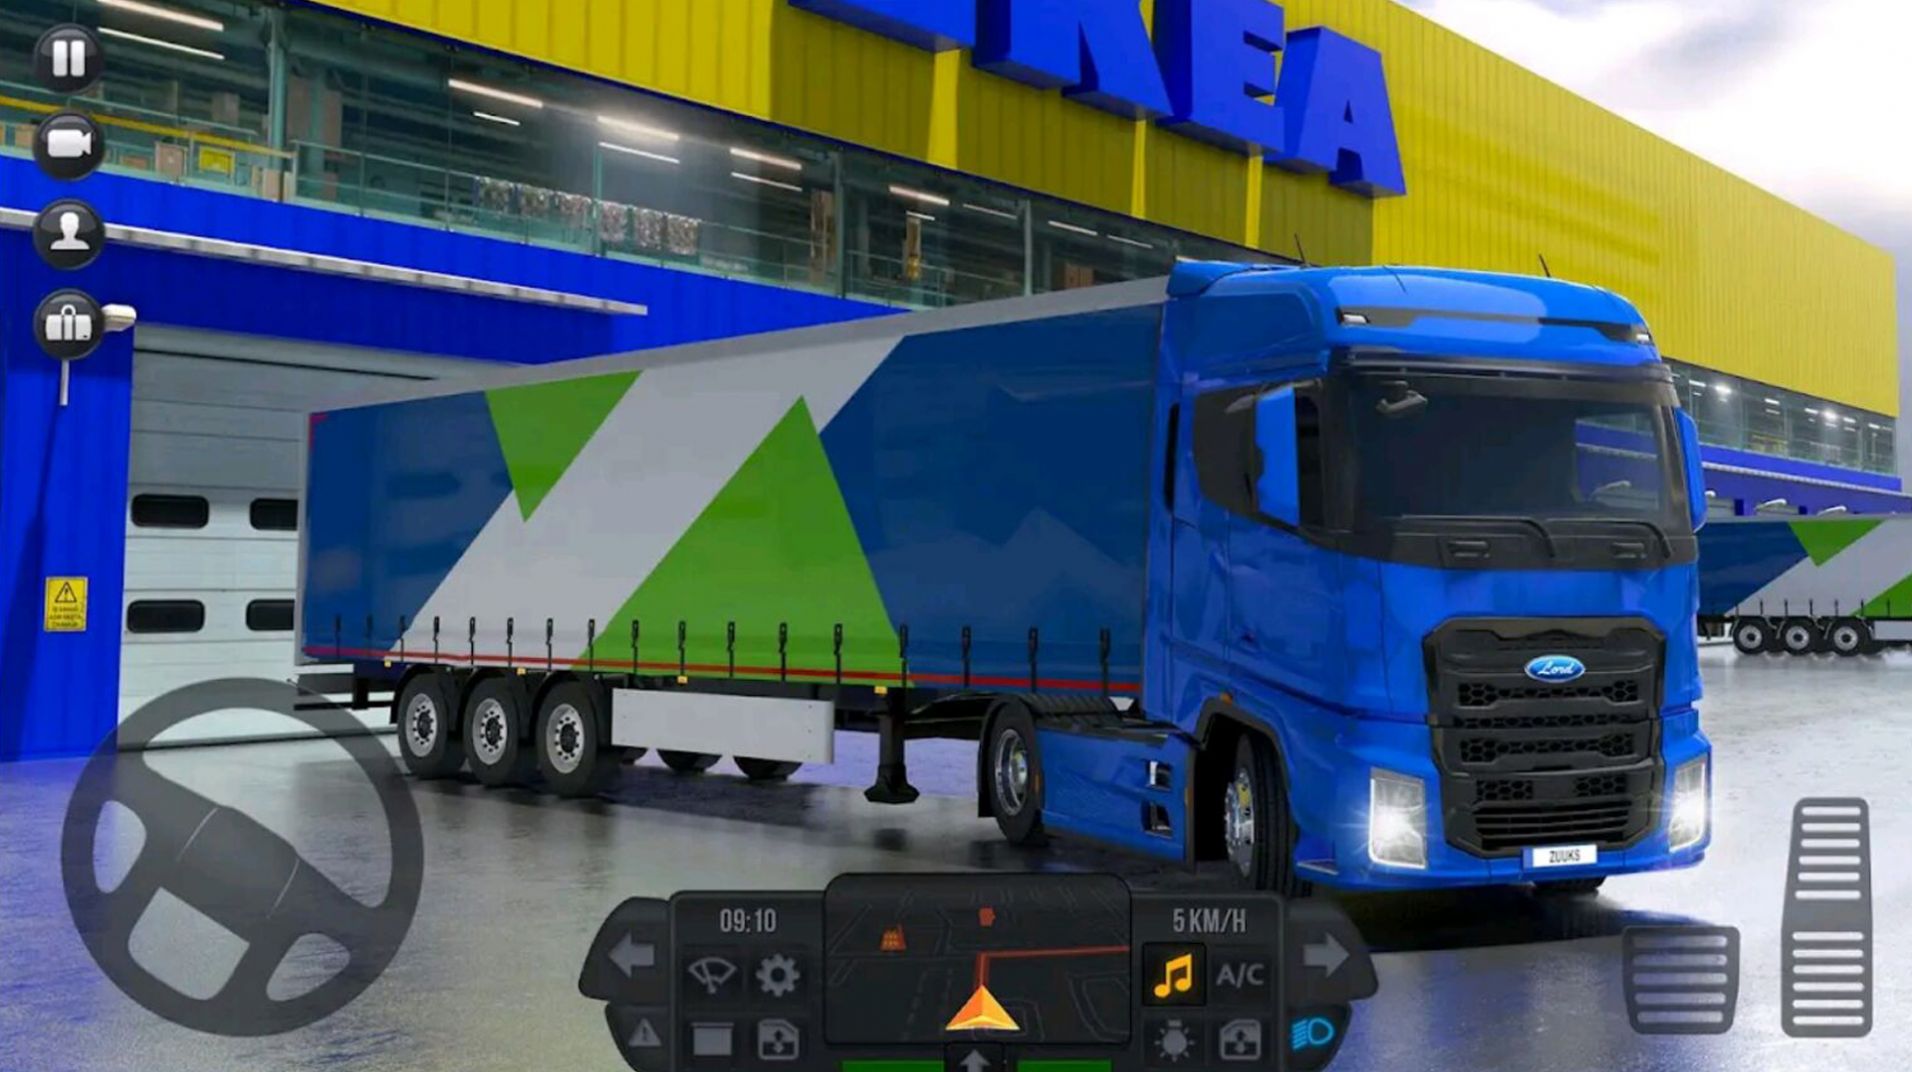 3D运输卡车驾驶图2